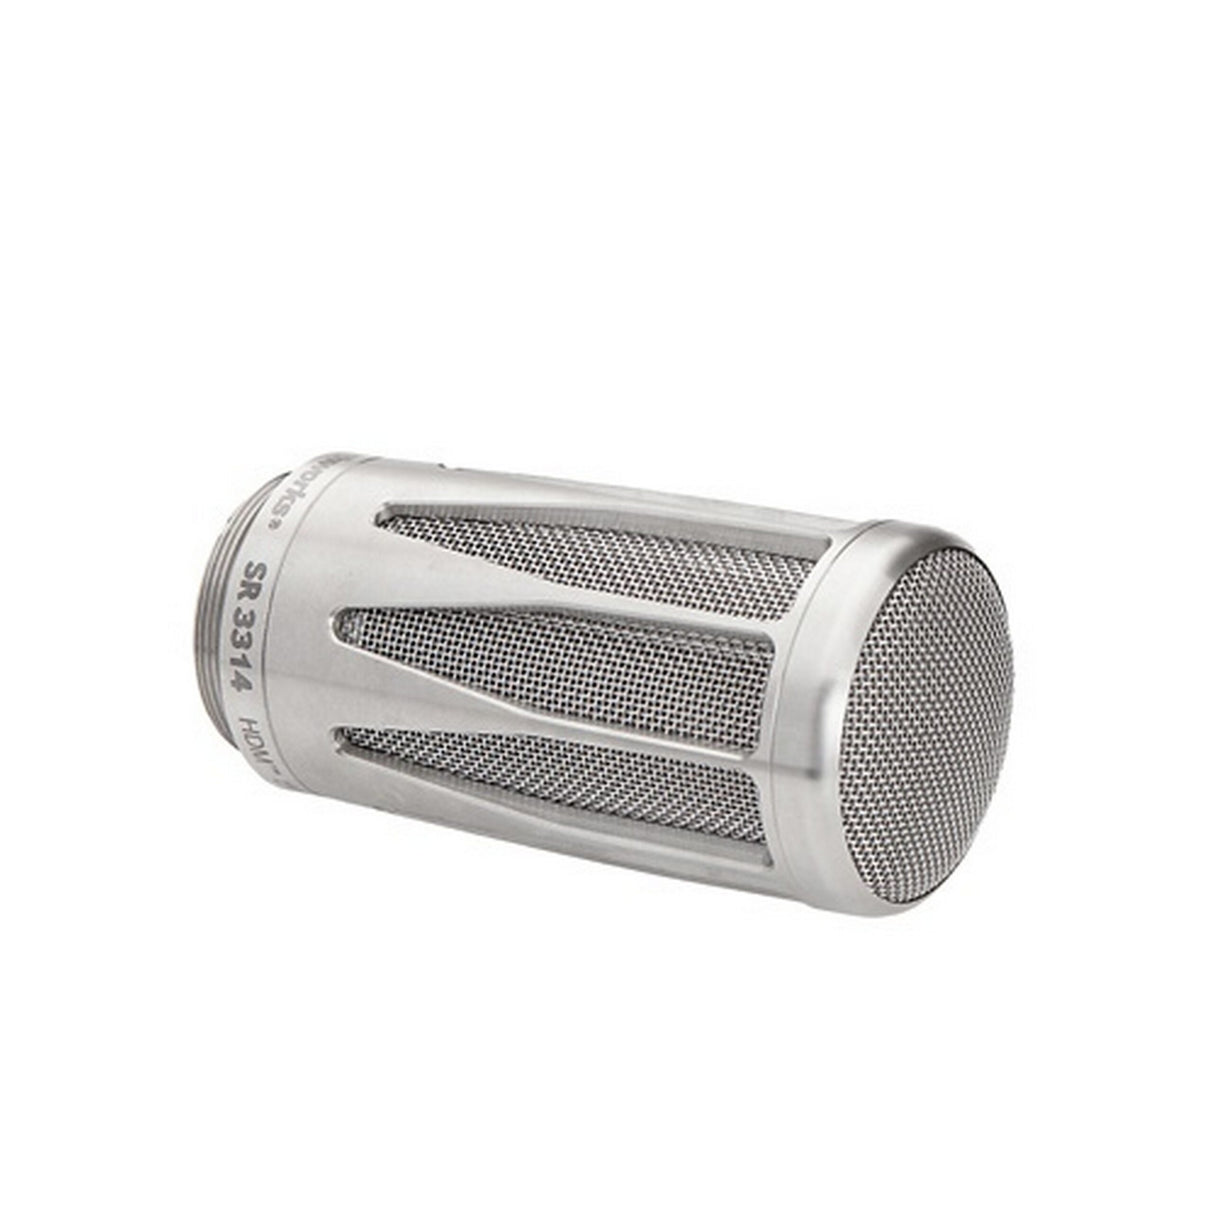 Earthworks SR3314 Cardioid Wireless Microphone Capsule, Stainless Steel